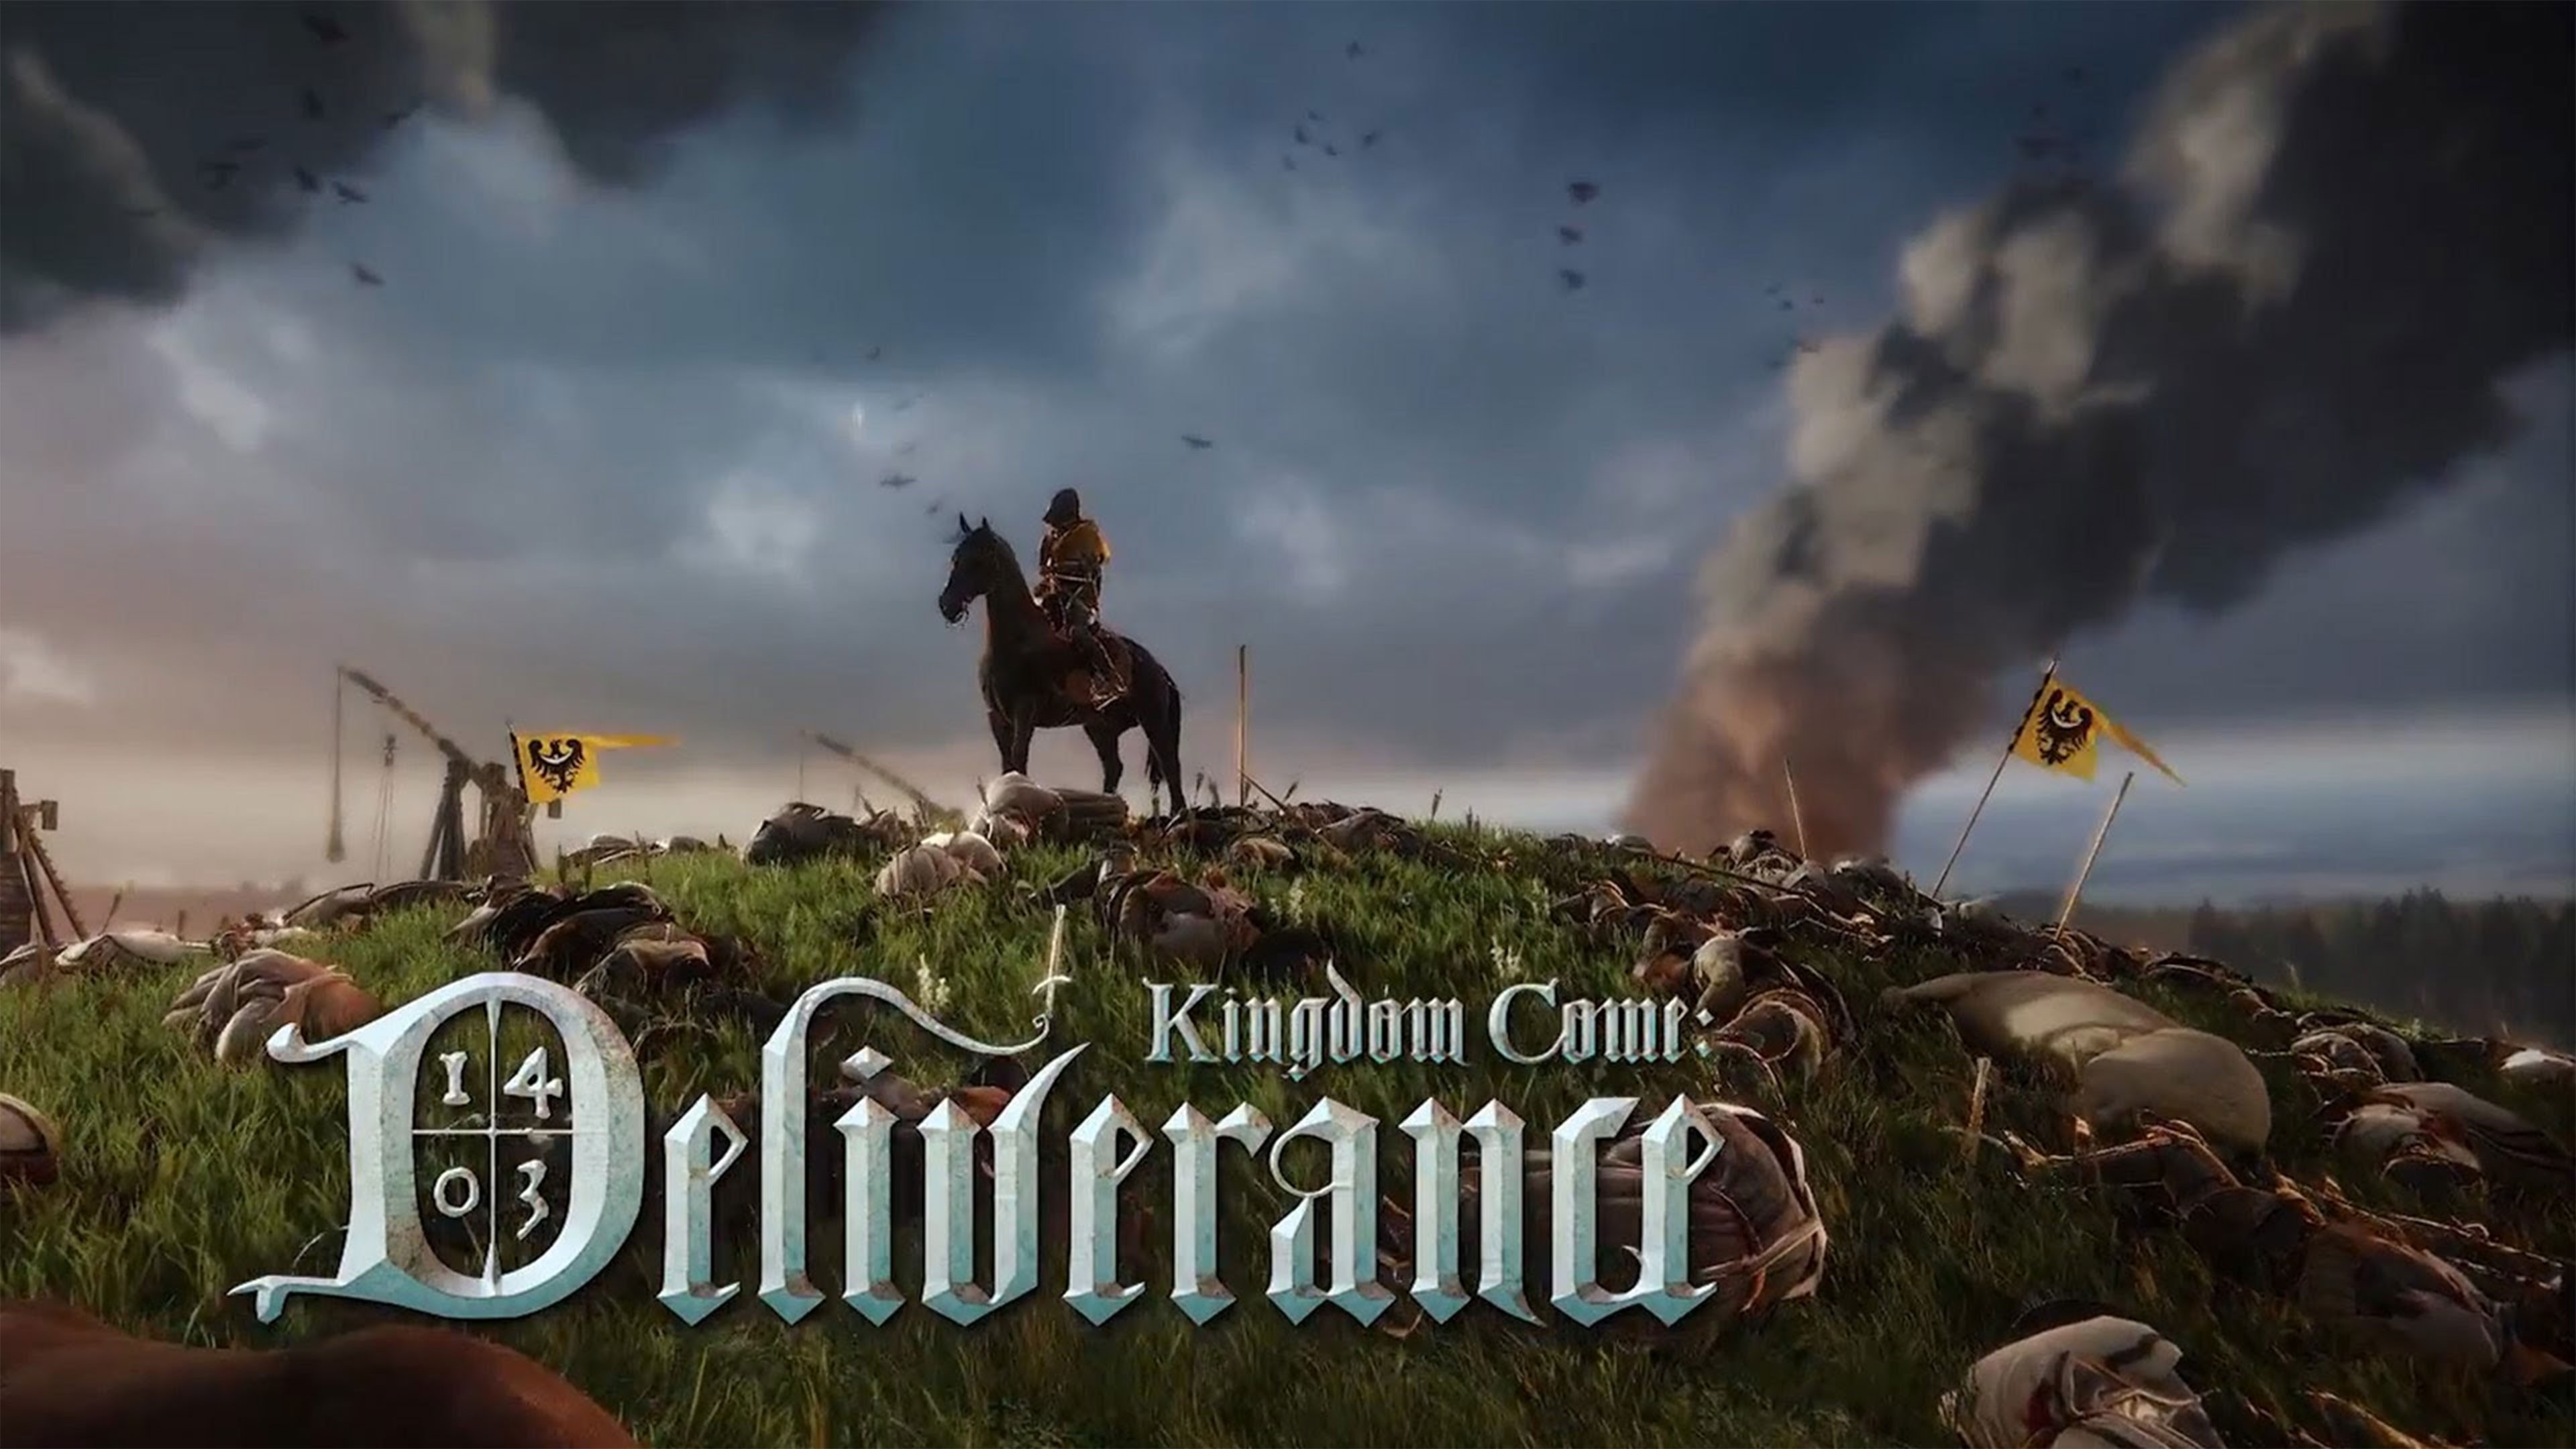 Кингдом длс. Игра Kingdom come: deliverance Постер. Kind of come deliverance. Kingdom come deliverance геймплей.